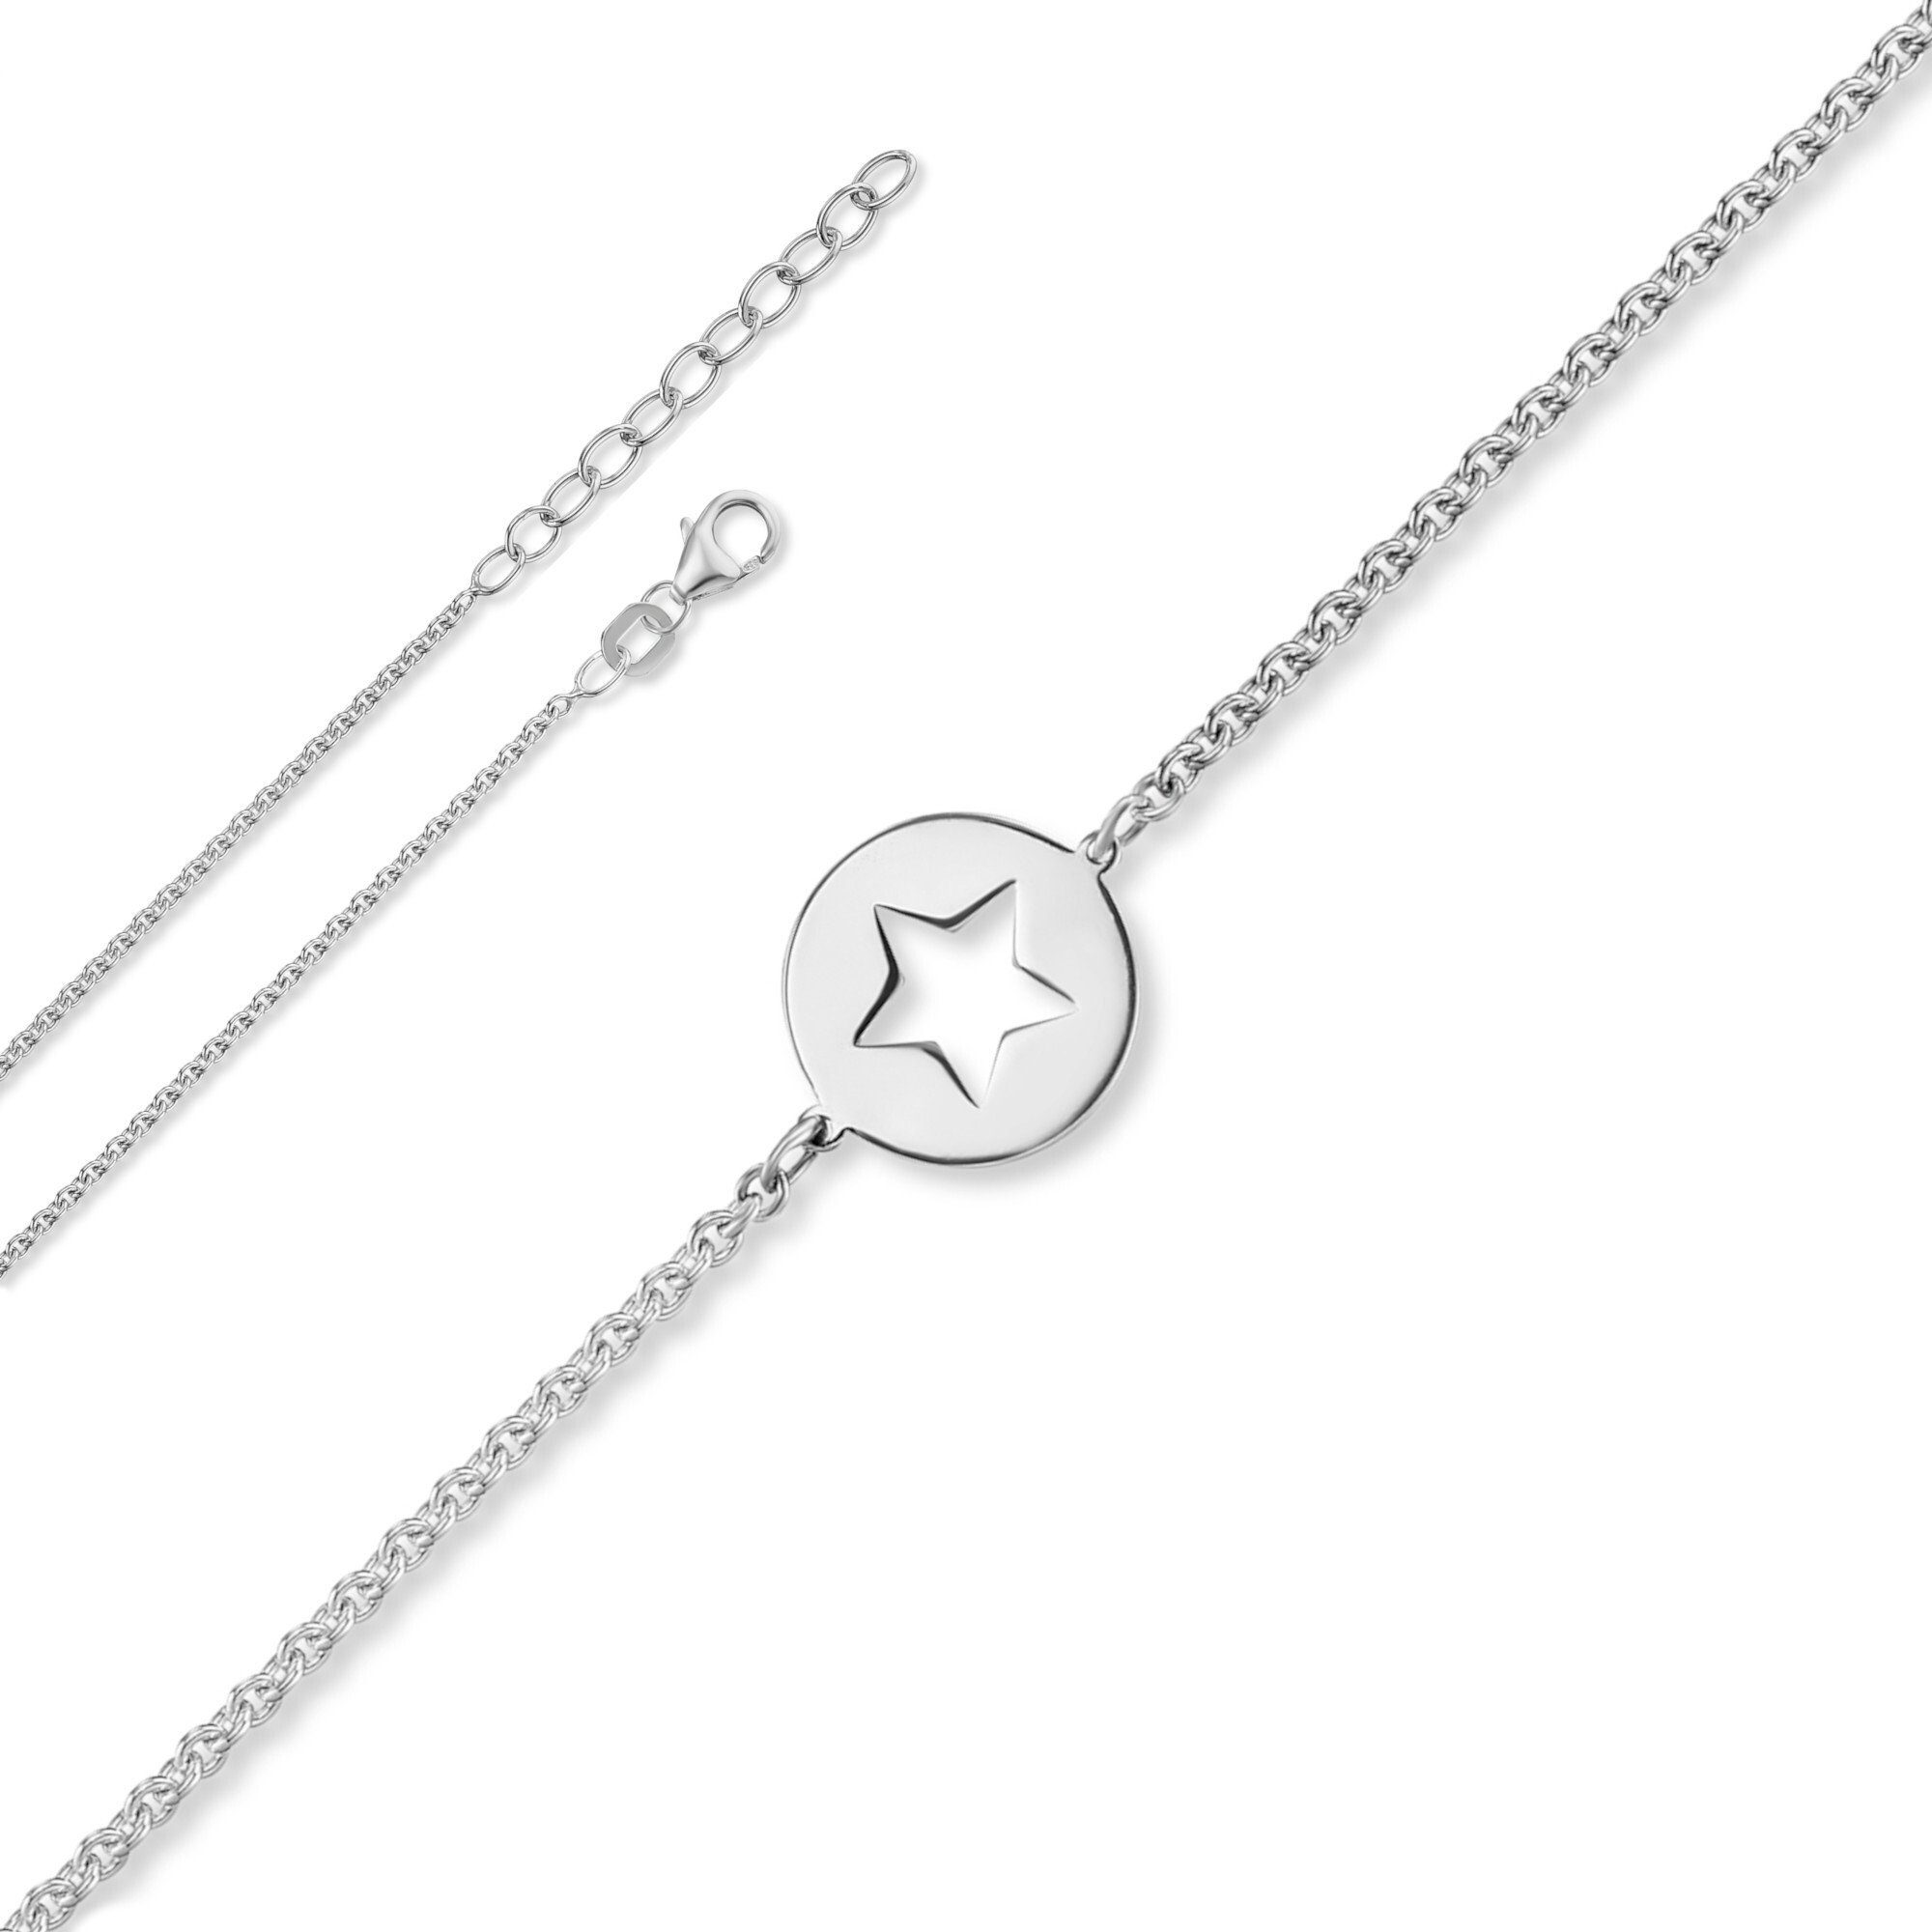 ONE ELEMENT Silberarmband Stern Armband aus 925 Silber 16 cm Ø, Damen Silber Schmuck Rundankerkette Stern | Silberarmbänder